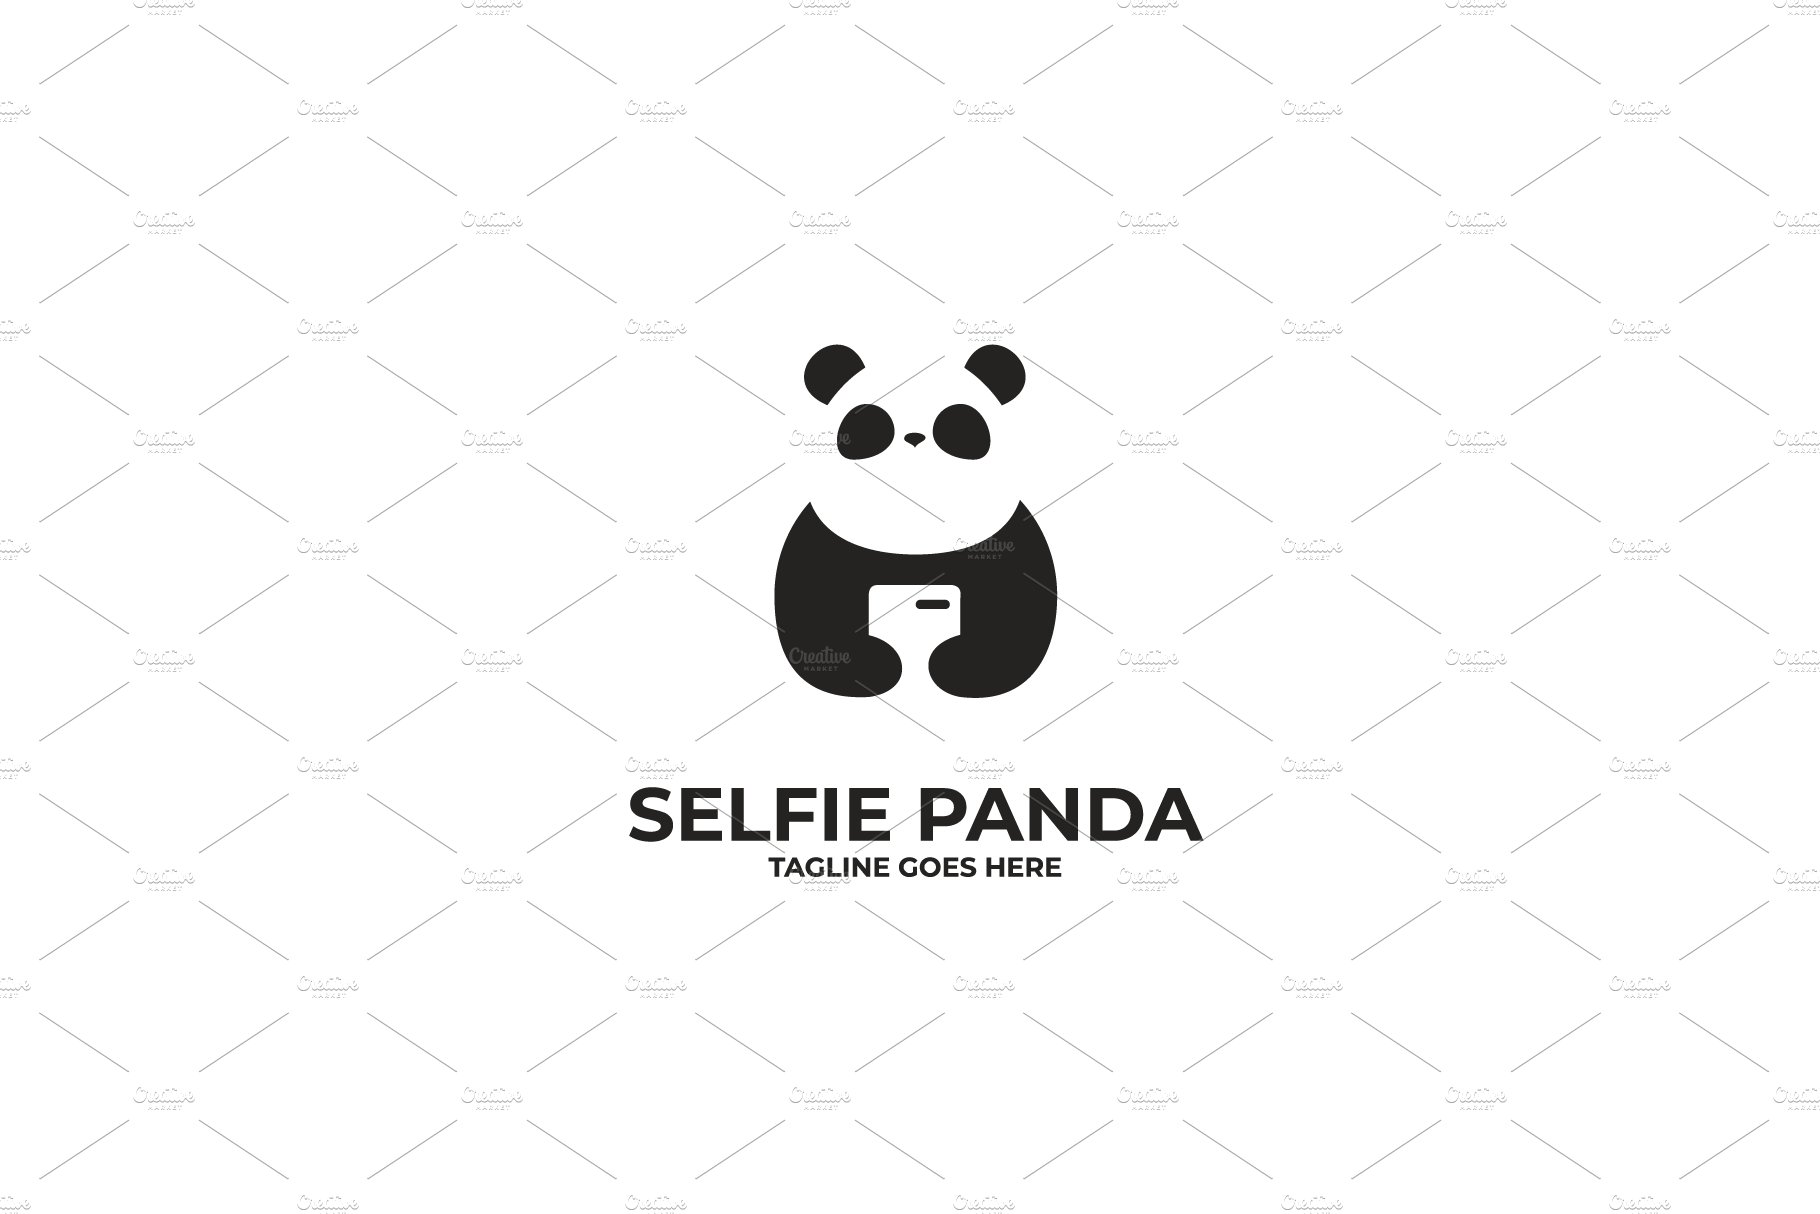 Panda Logo Design cover image.